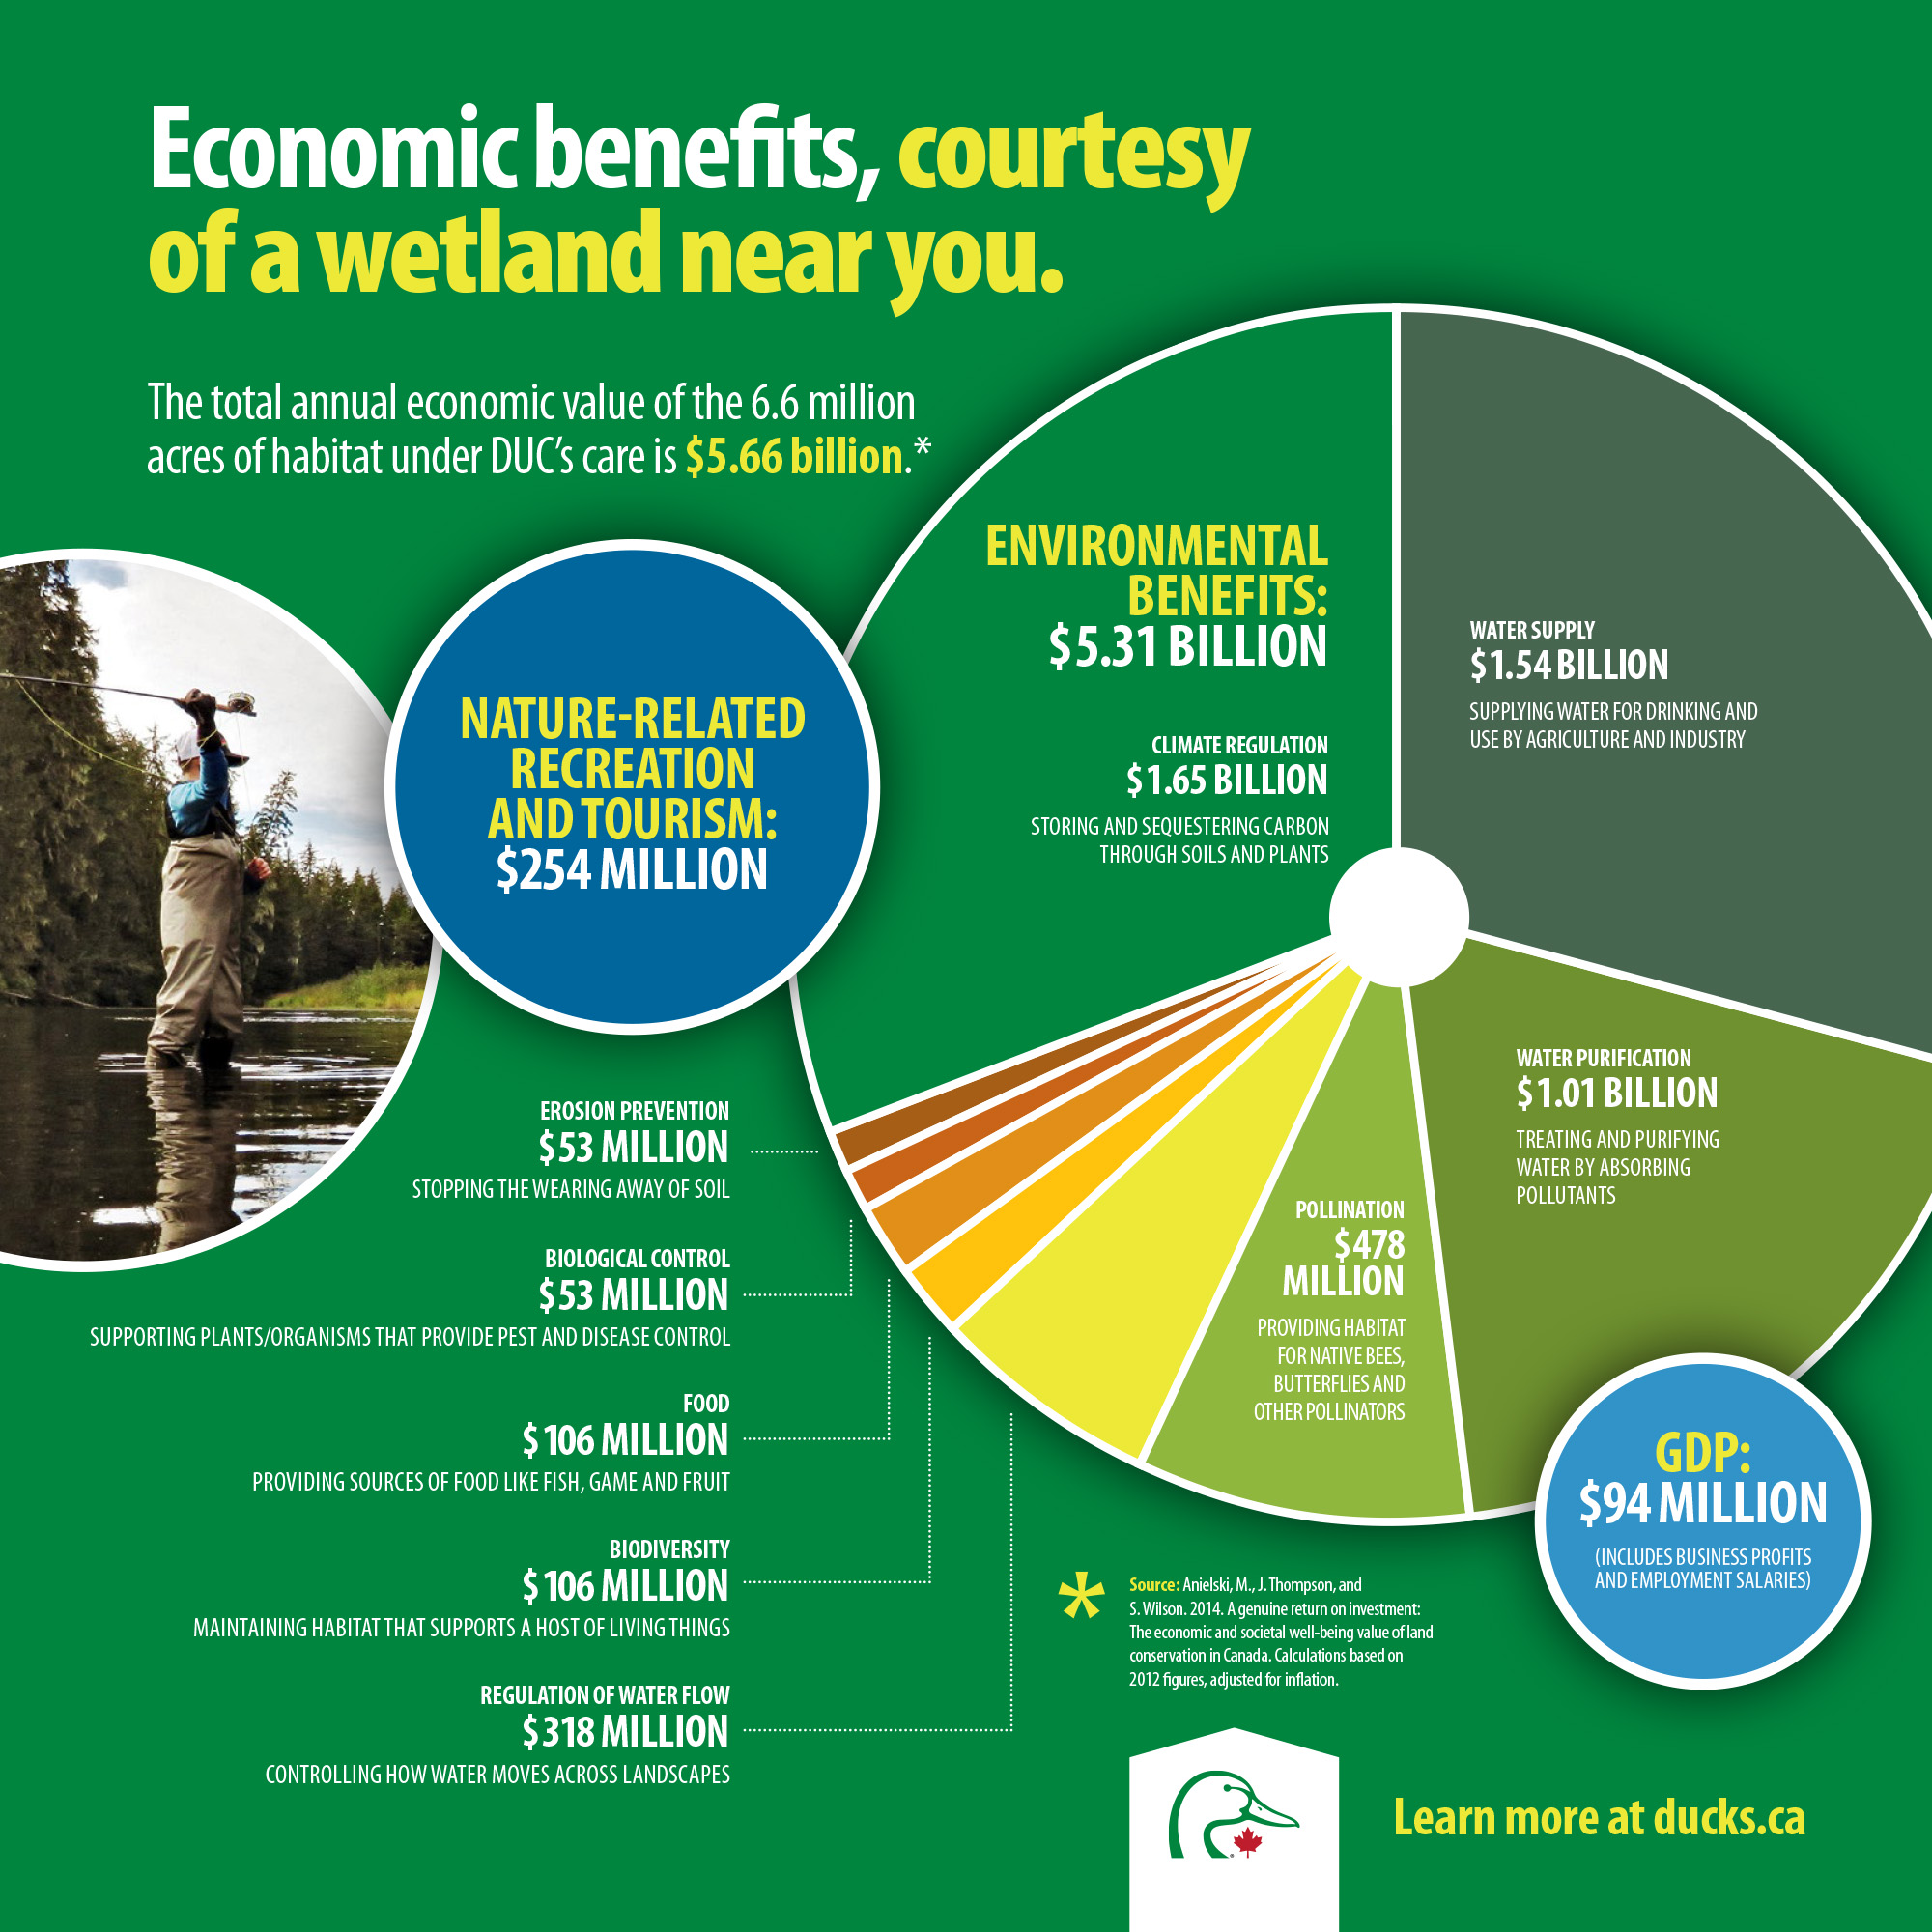 Economic benefits courtesy of a wetland near you